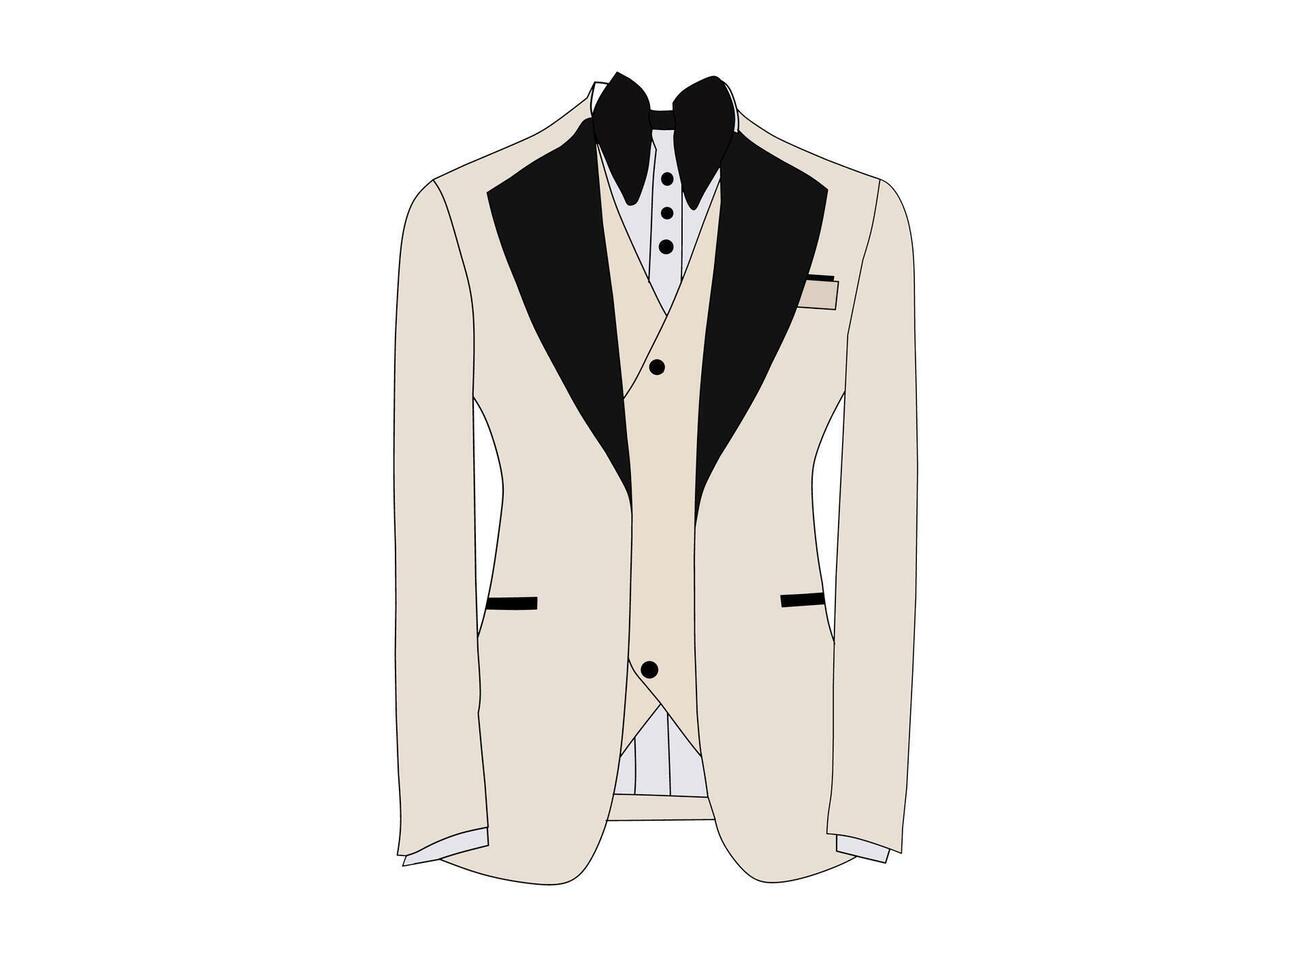 Vector illustration of men's tuxedo formal wear in bright white color. An illustration concept based on the formal fection of men's clothing.